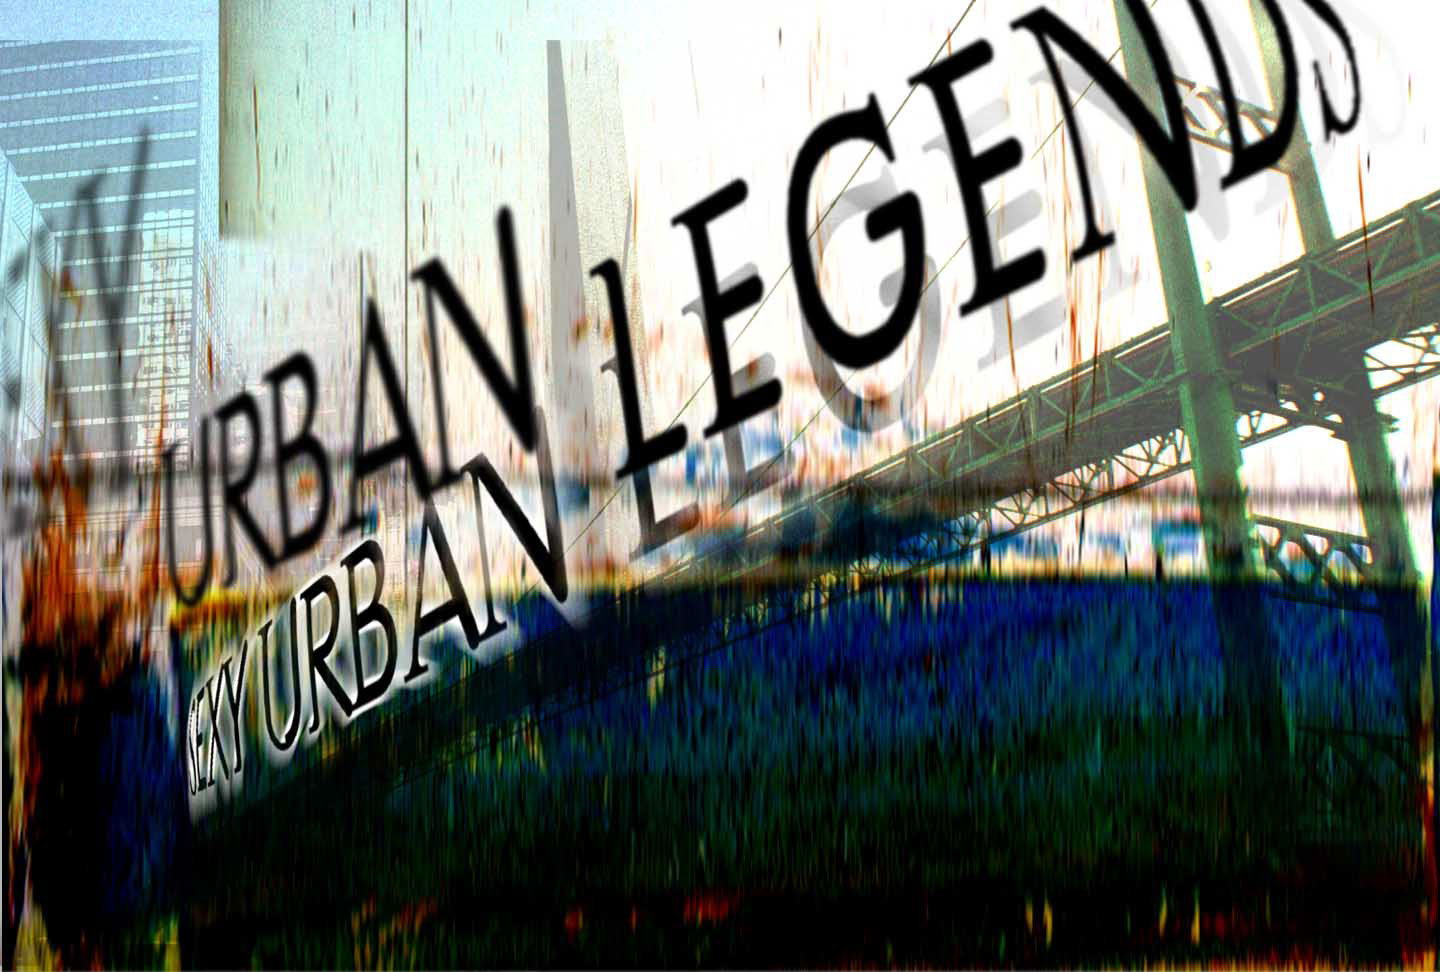 Sexy Urban Legends